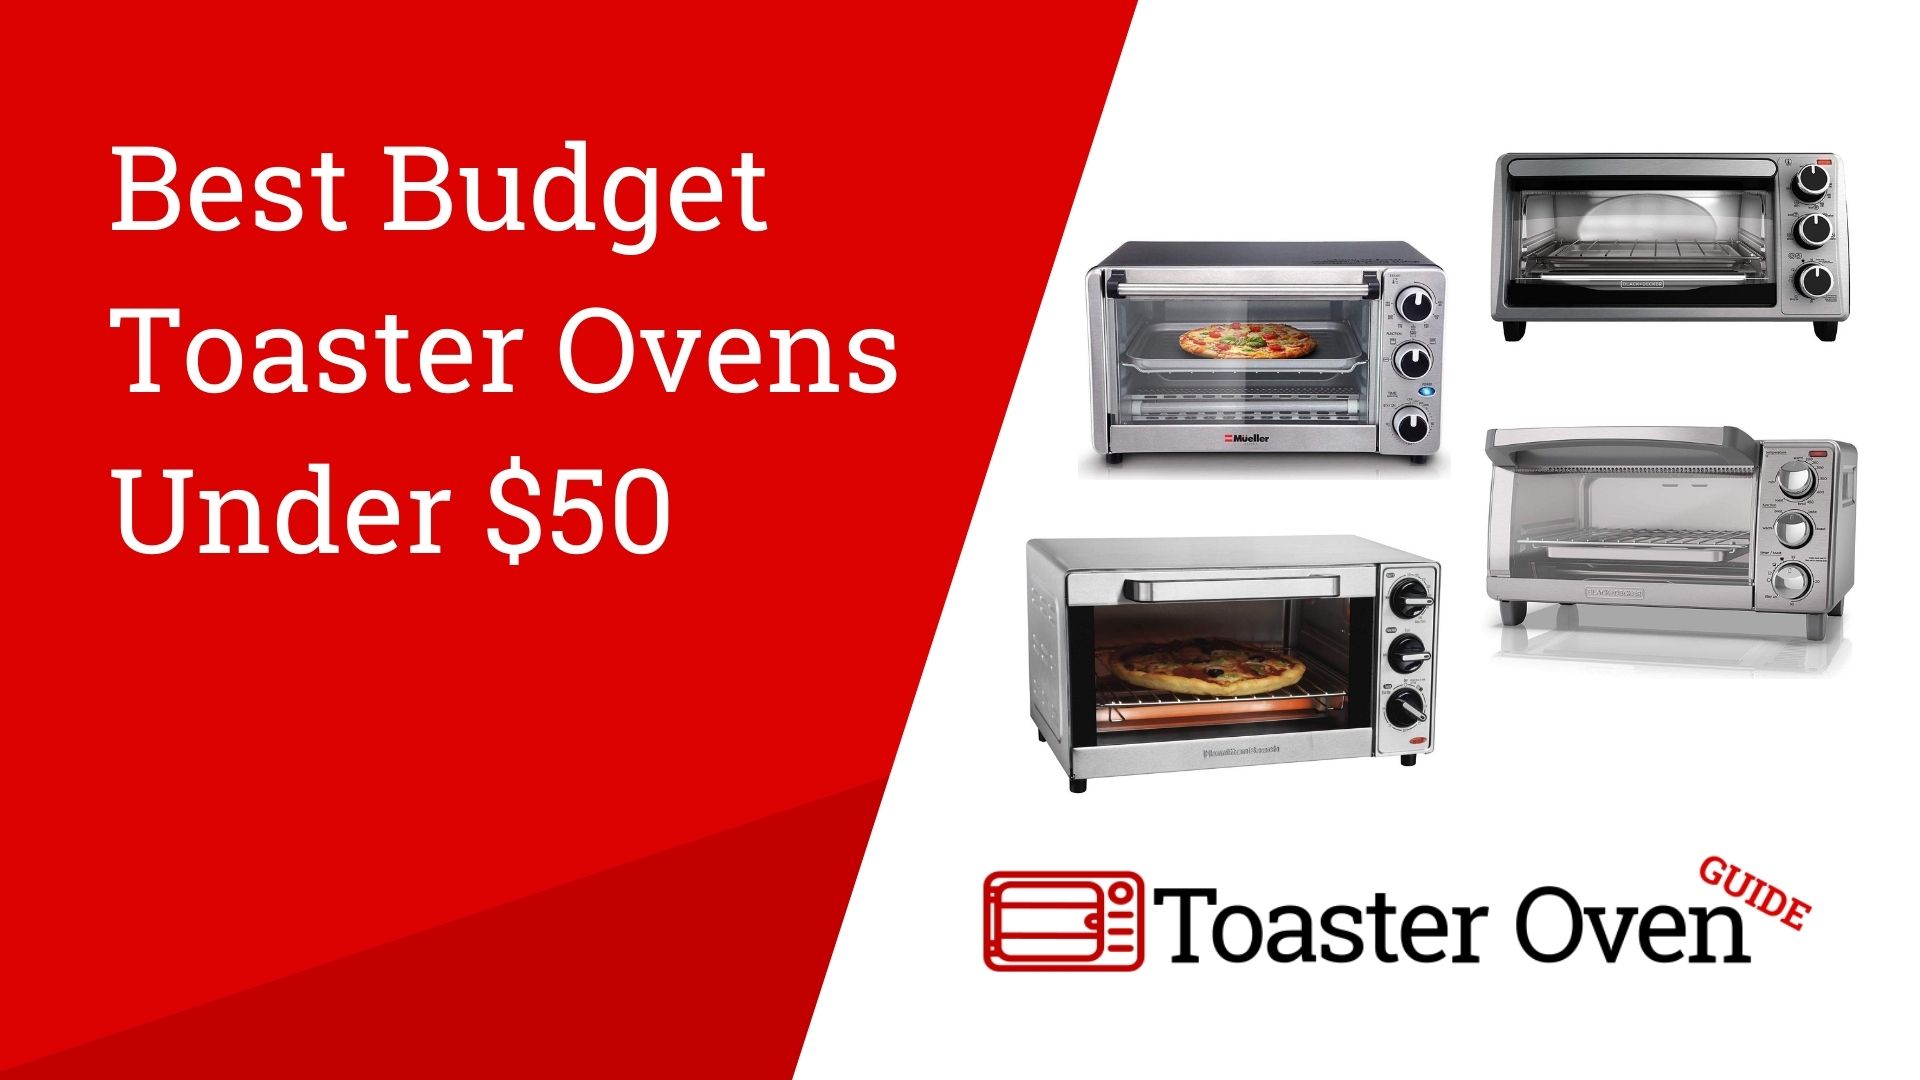 https://www.toasterovenguide.com/wp-content/uploads/2019/05/Best-Budget-Toaster-Ovens-Under-50-Dollars.jpg